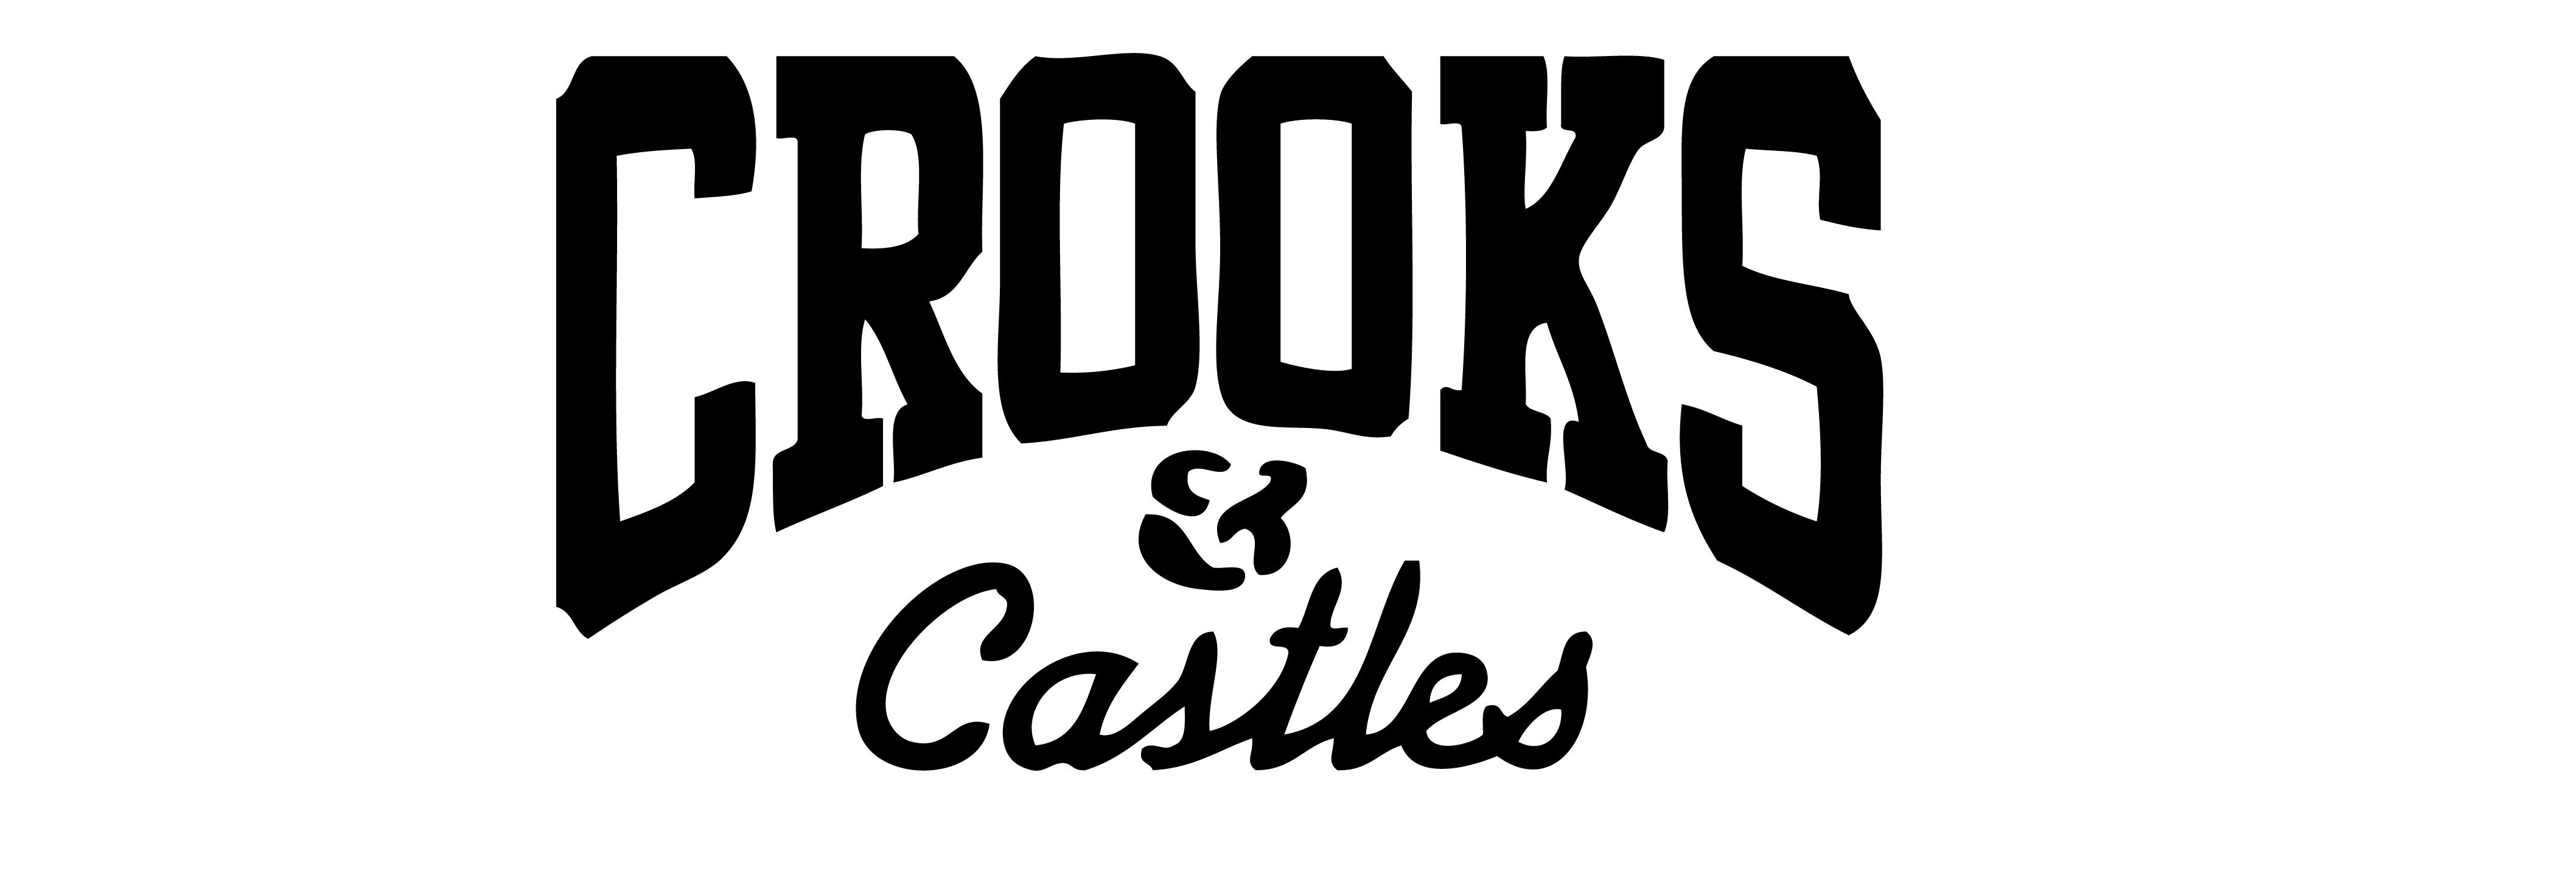 Crooks and Castles Logo - CROOKS-CASTLES-LOGO-psd50234 (2) - Direct Liquidation | Vancouver ...